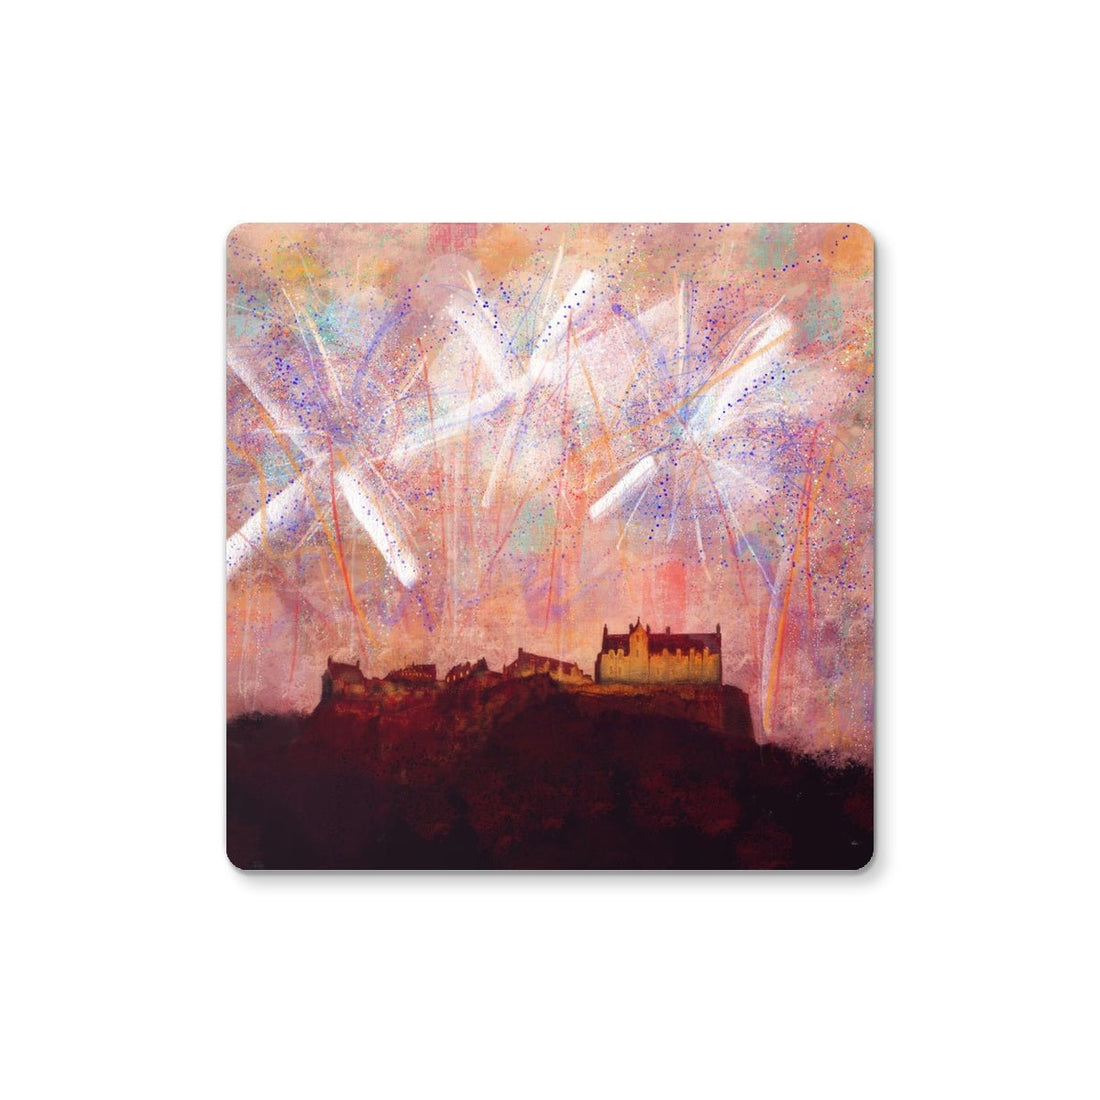 Edinburgh Castle Fireworks Art Gifts Coaster